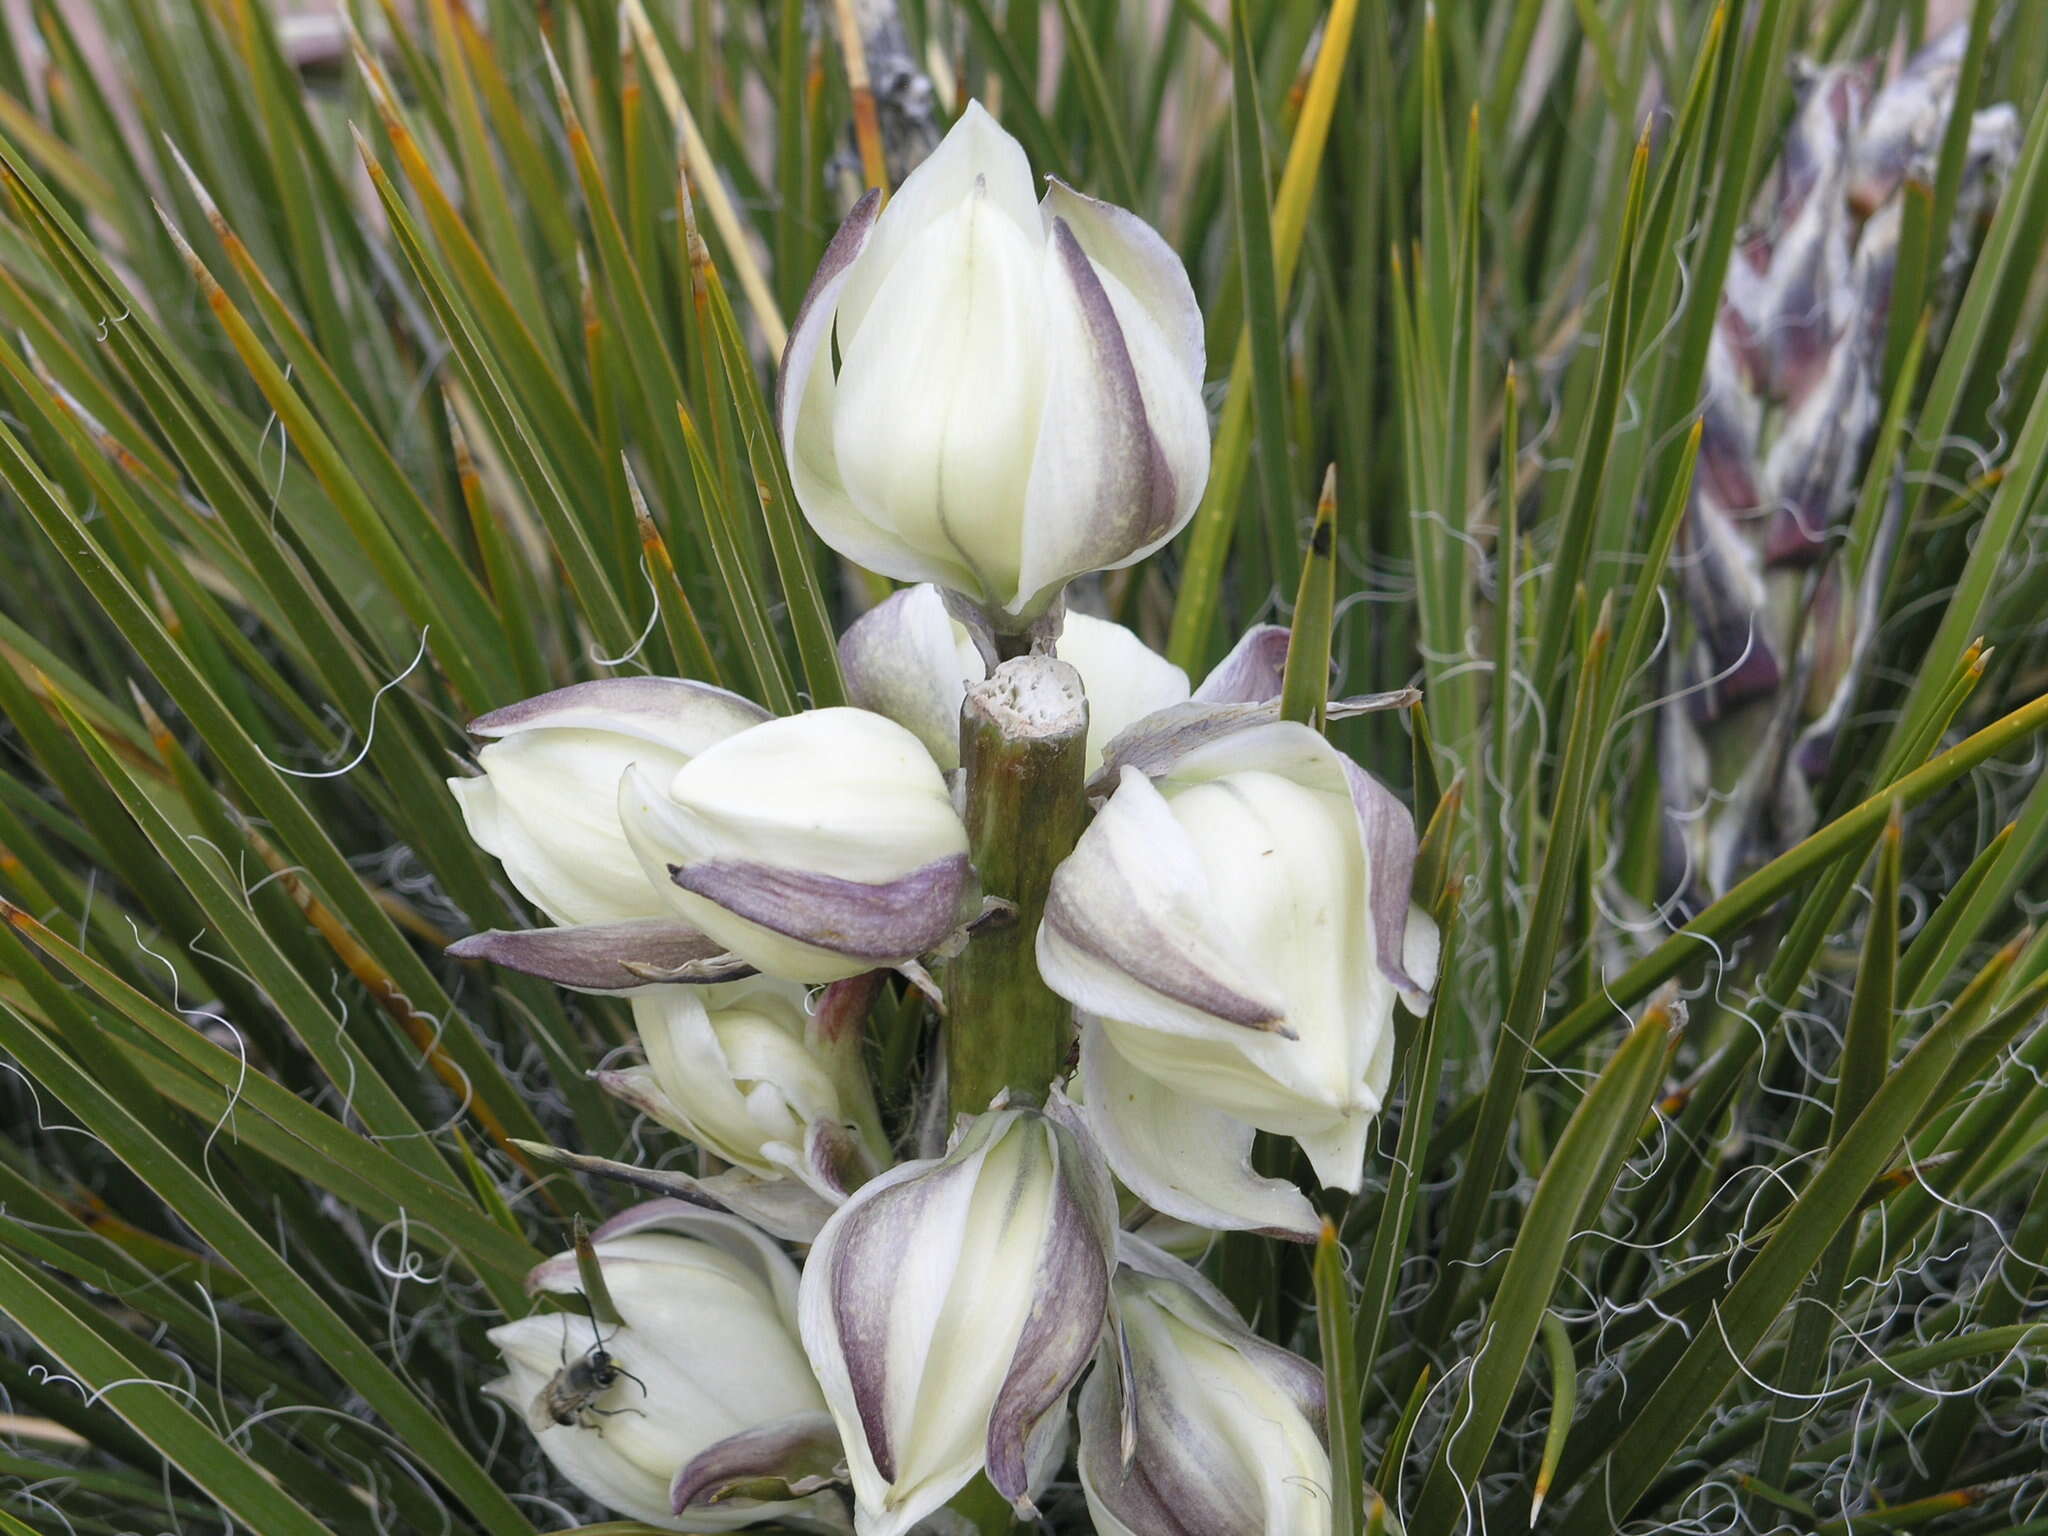 Image of Navajo yucca